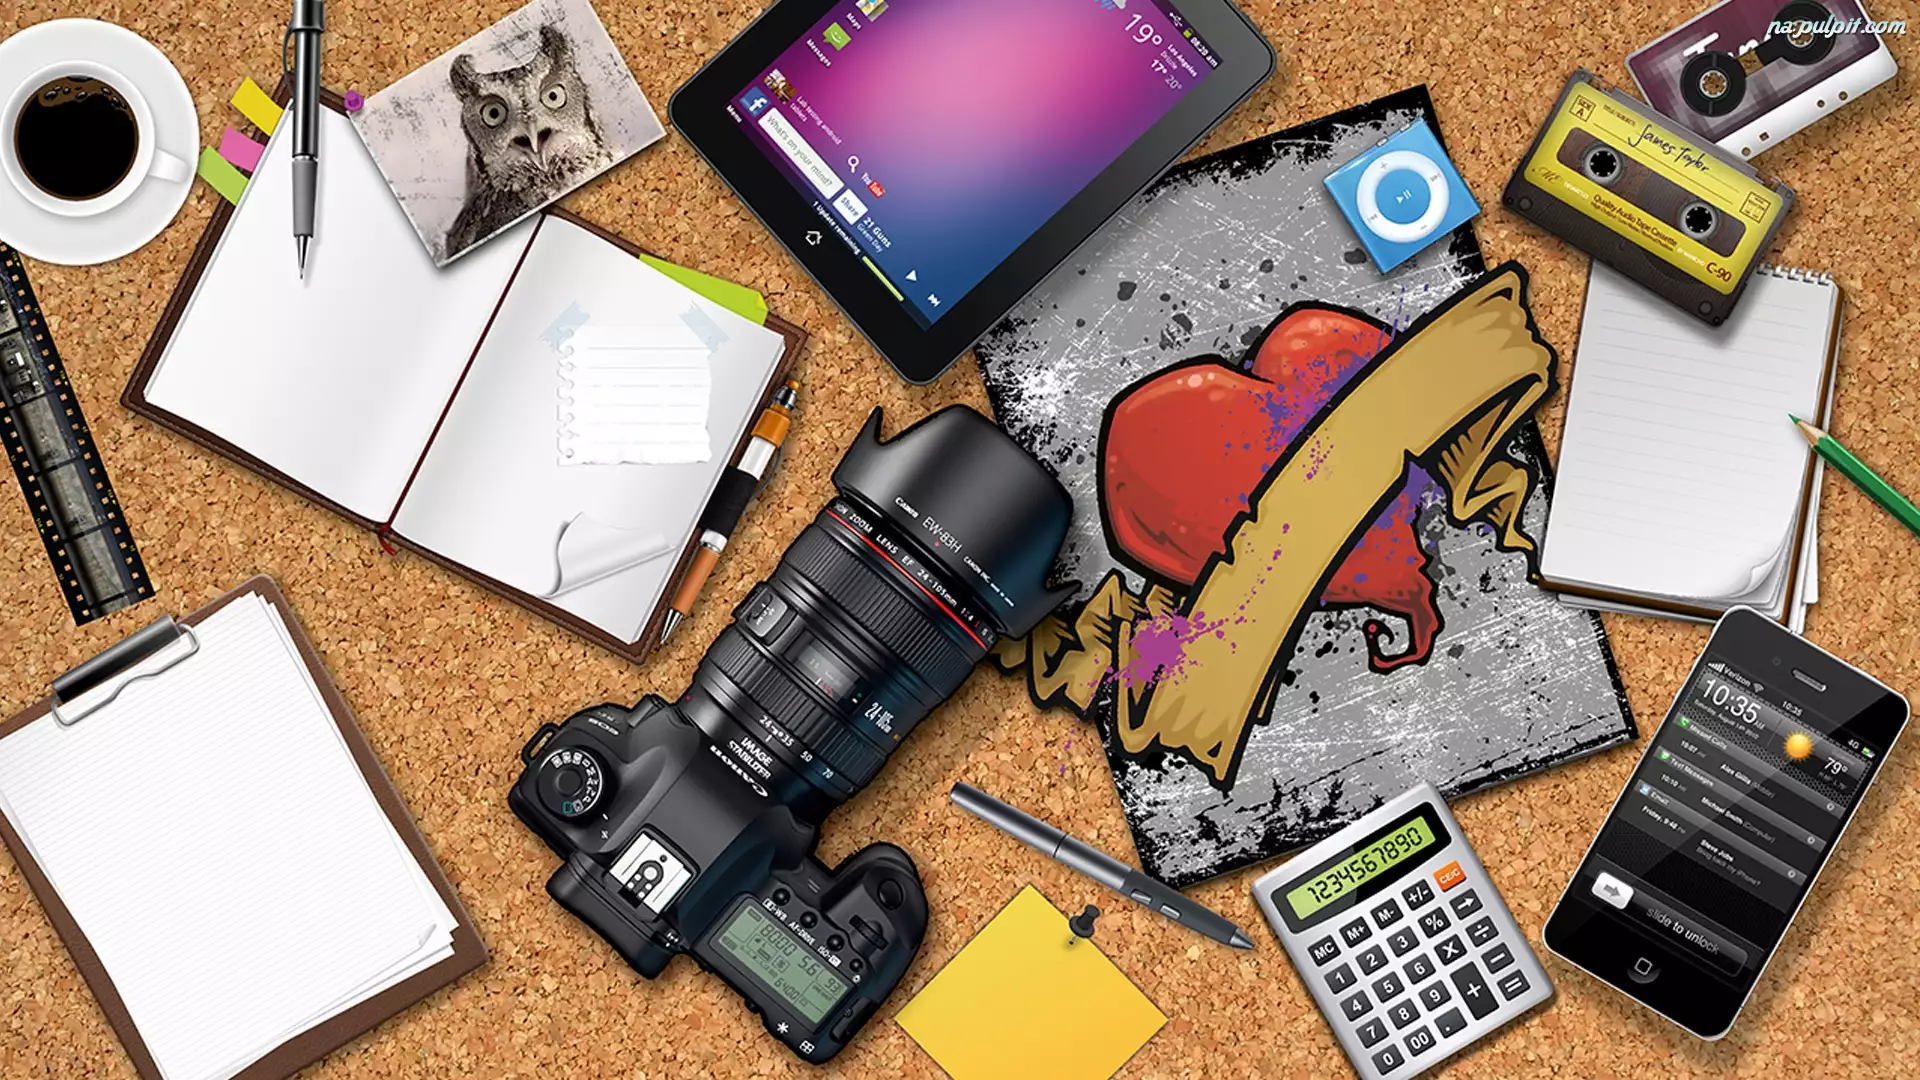 Telefon komórkowy, Tablet, Kalkulator, Aparat fotograficzny, Kasety